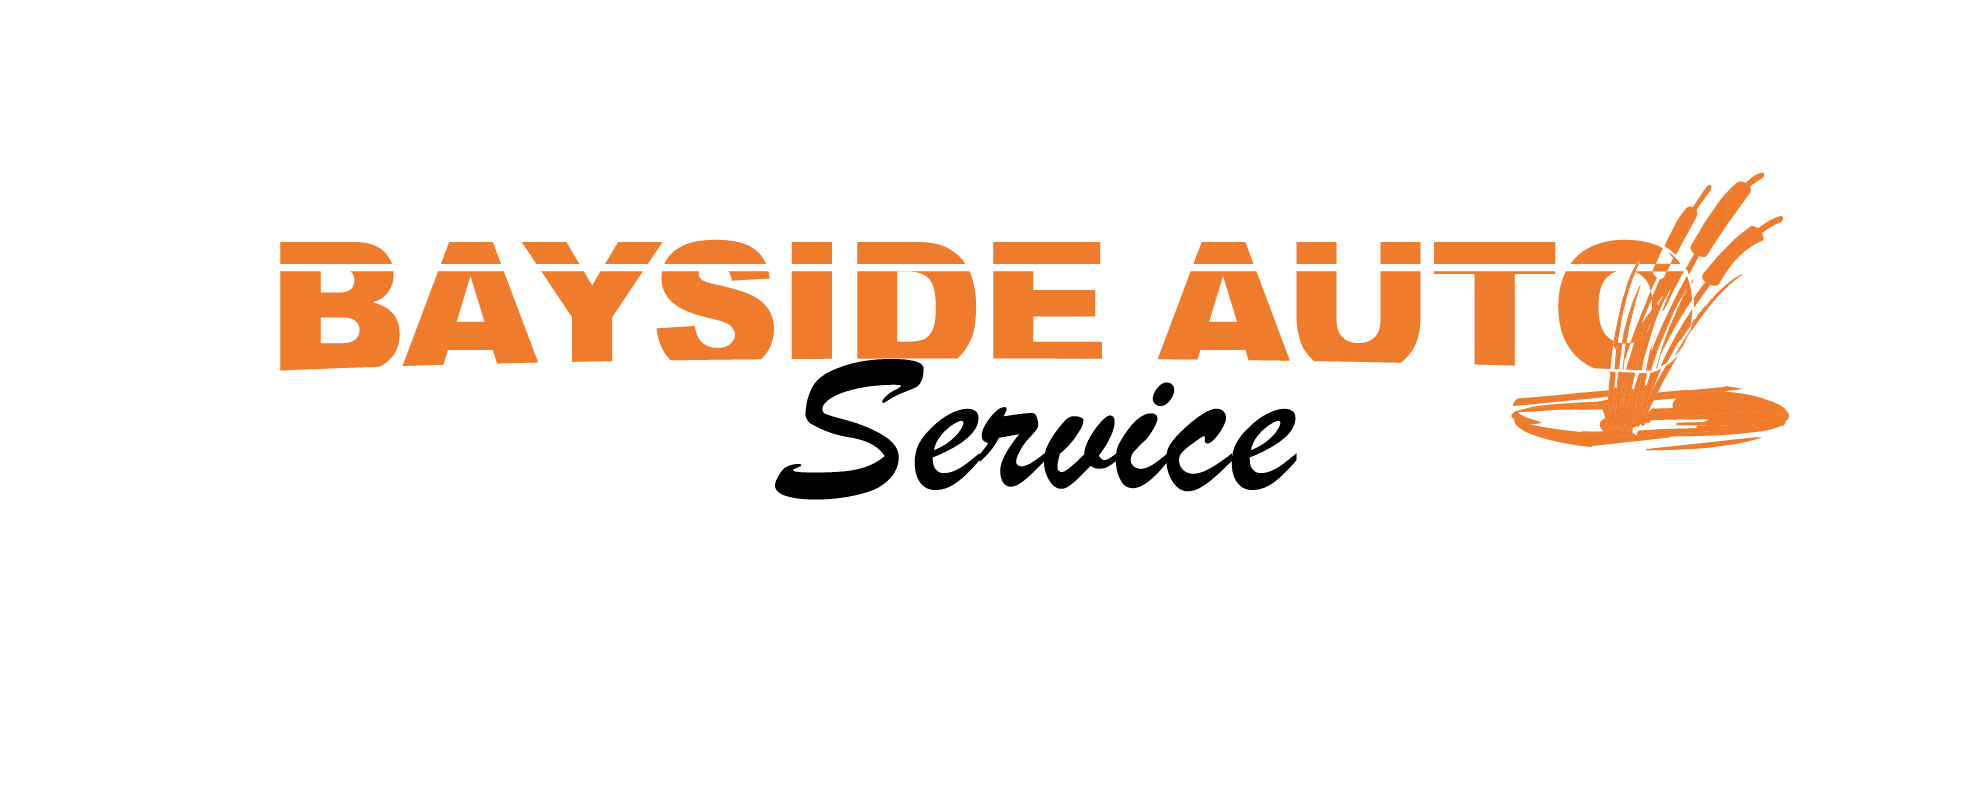 Bayside  Auto Service - Stevensville, MD 21666 - (410)643-2886 | ShowMeLocal.com